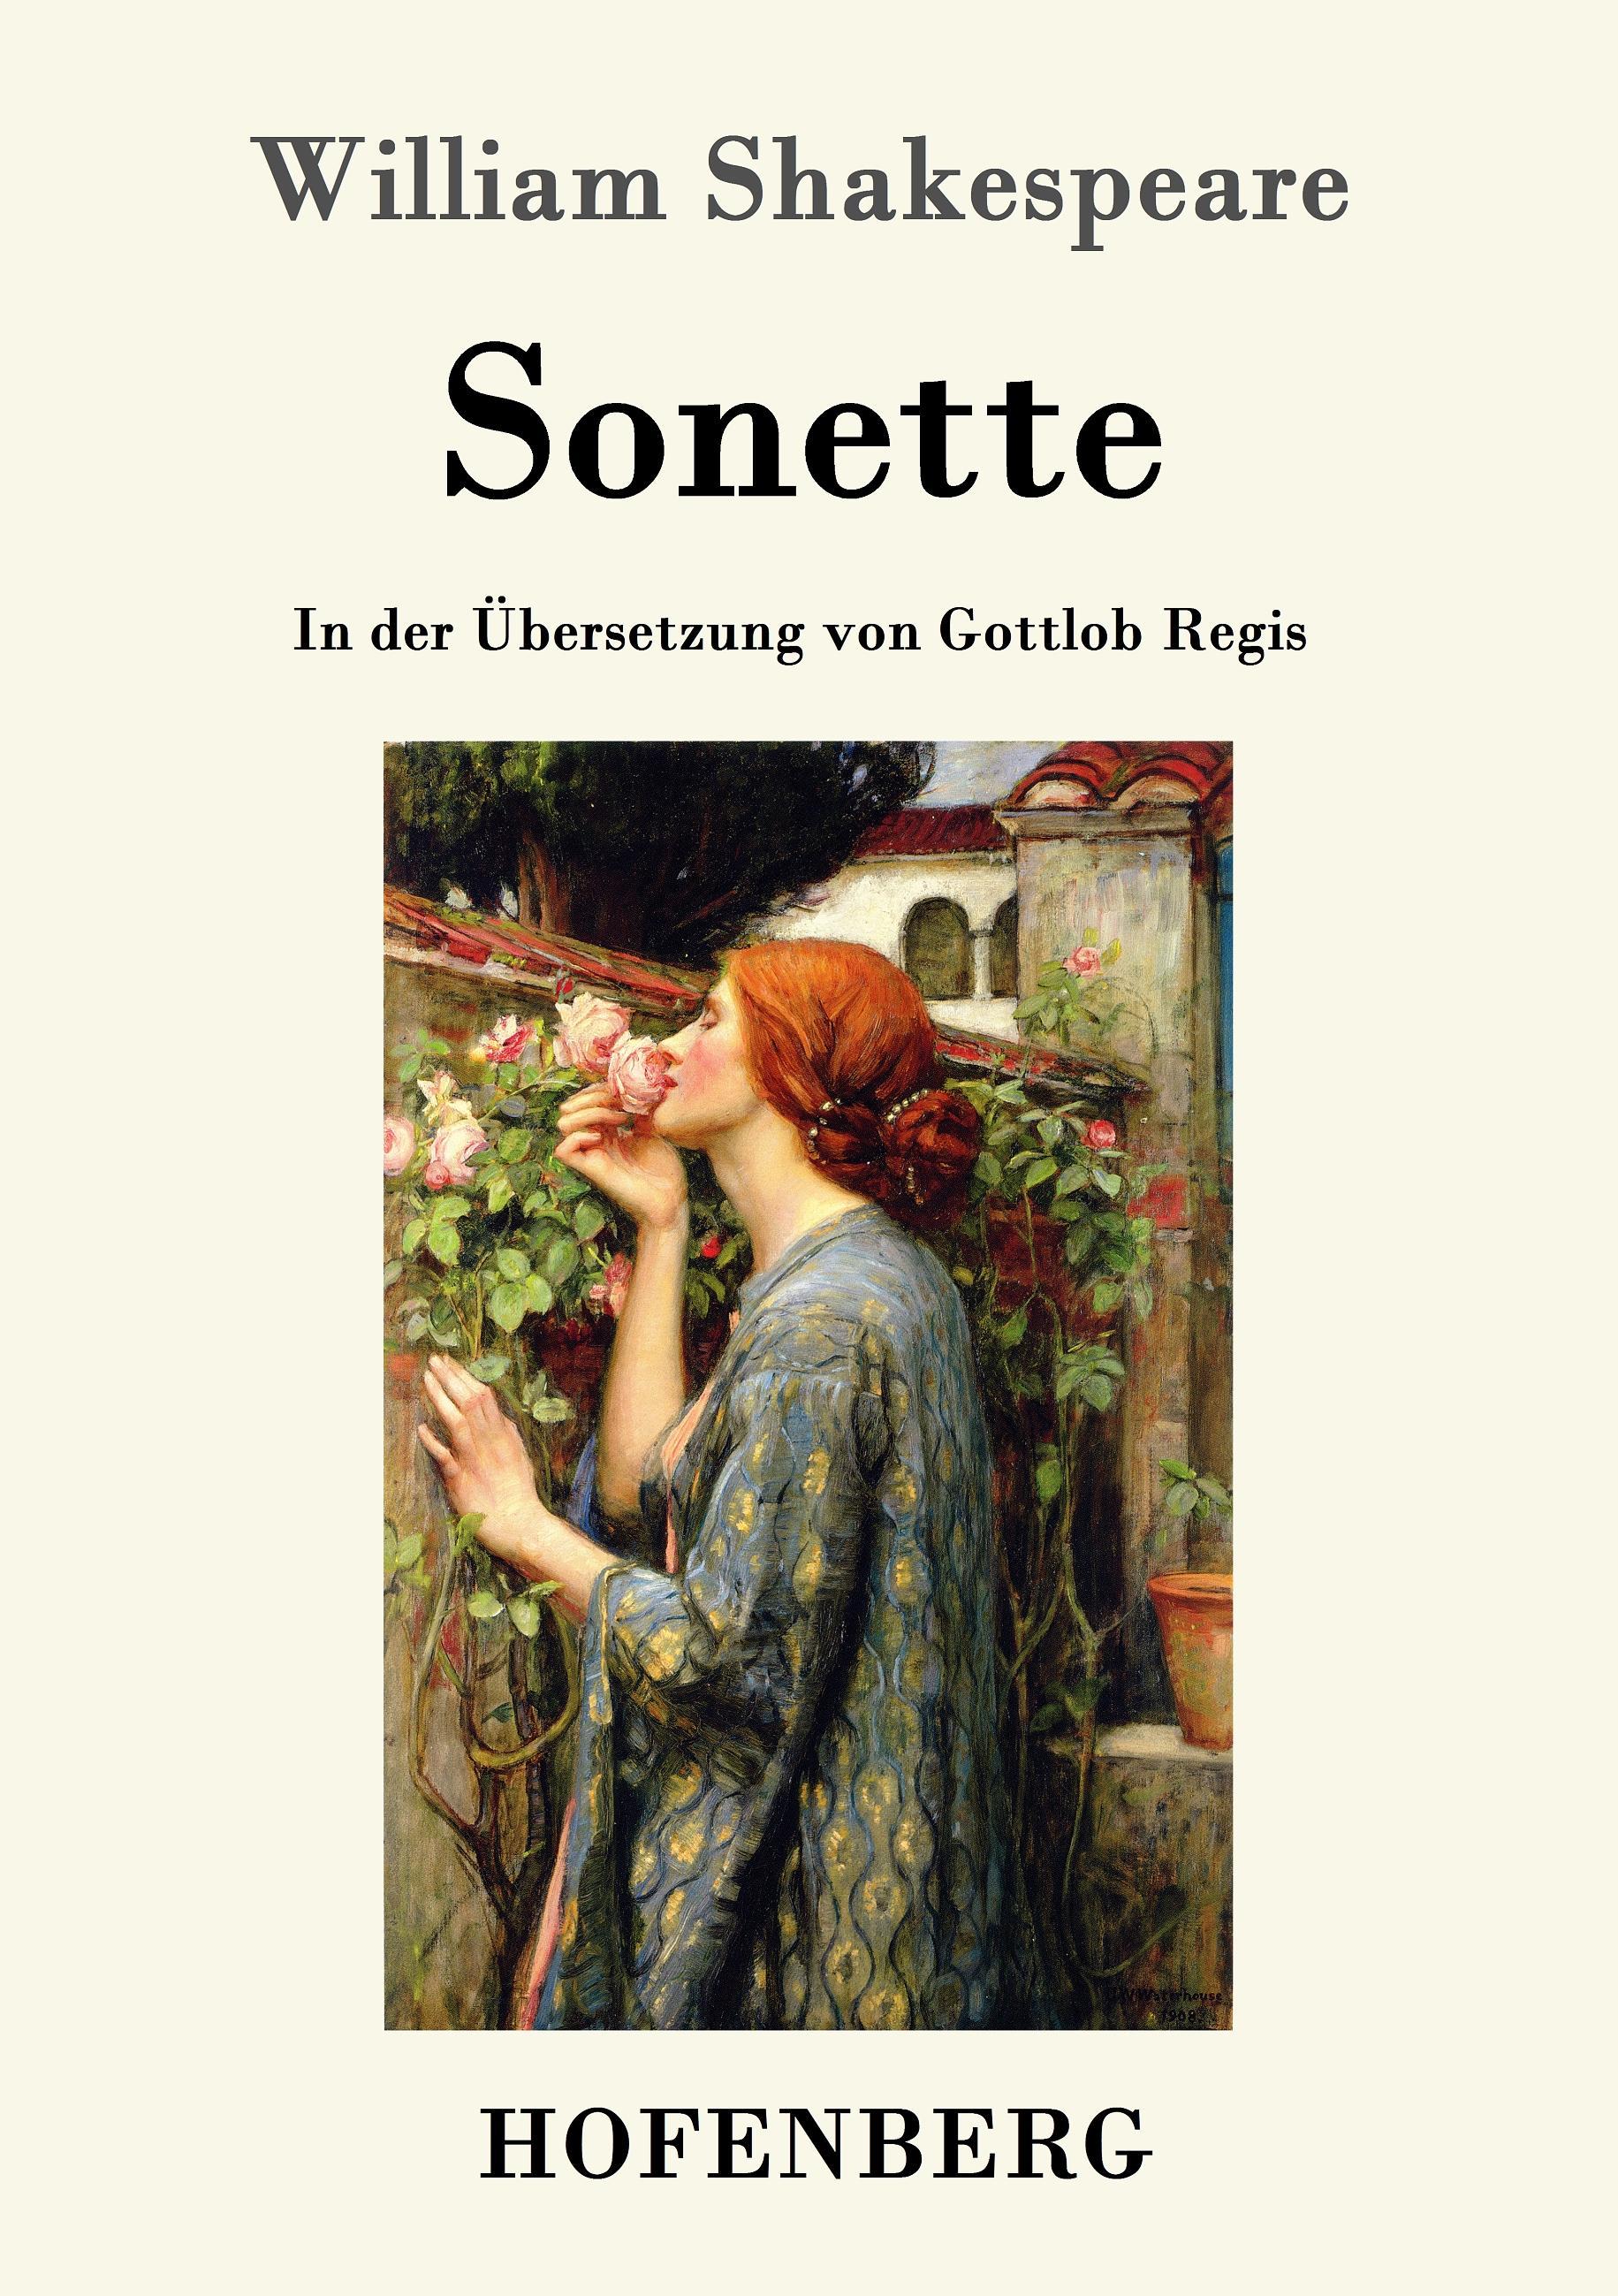 Sonette - Shakespeare, William